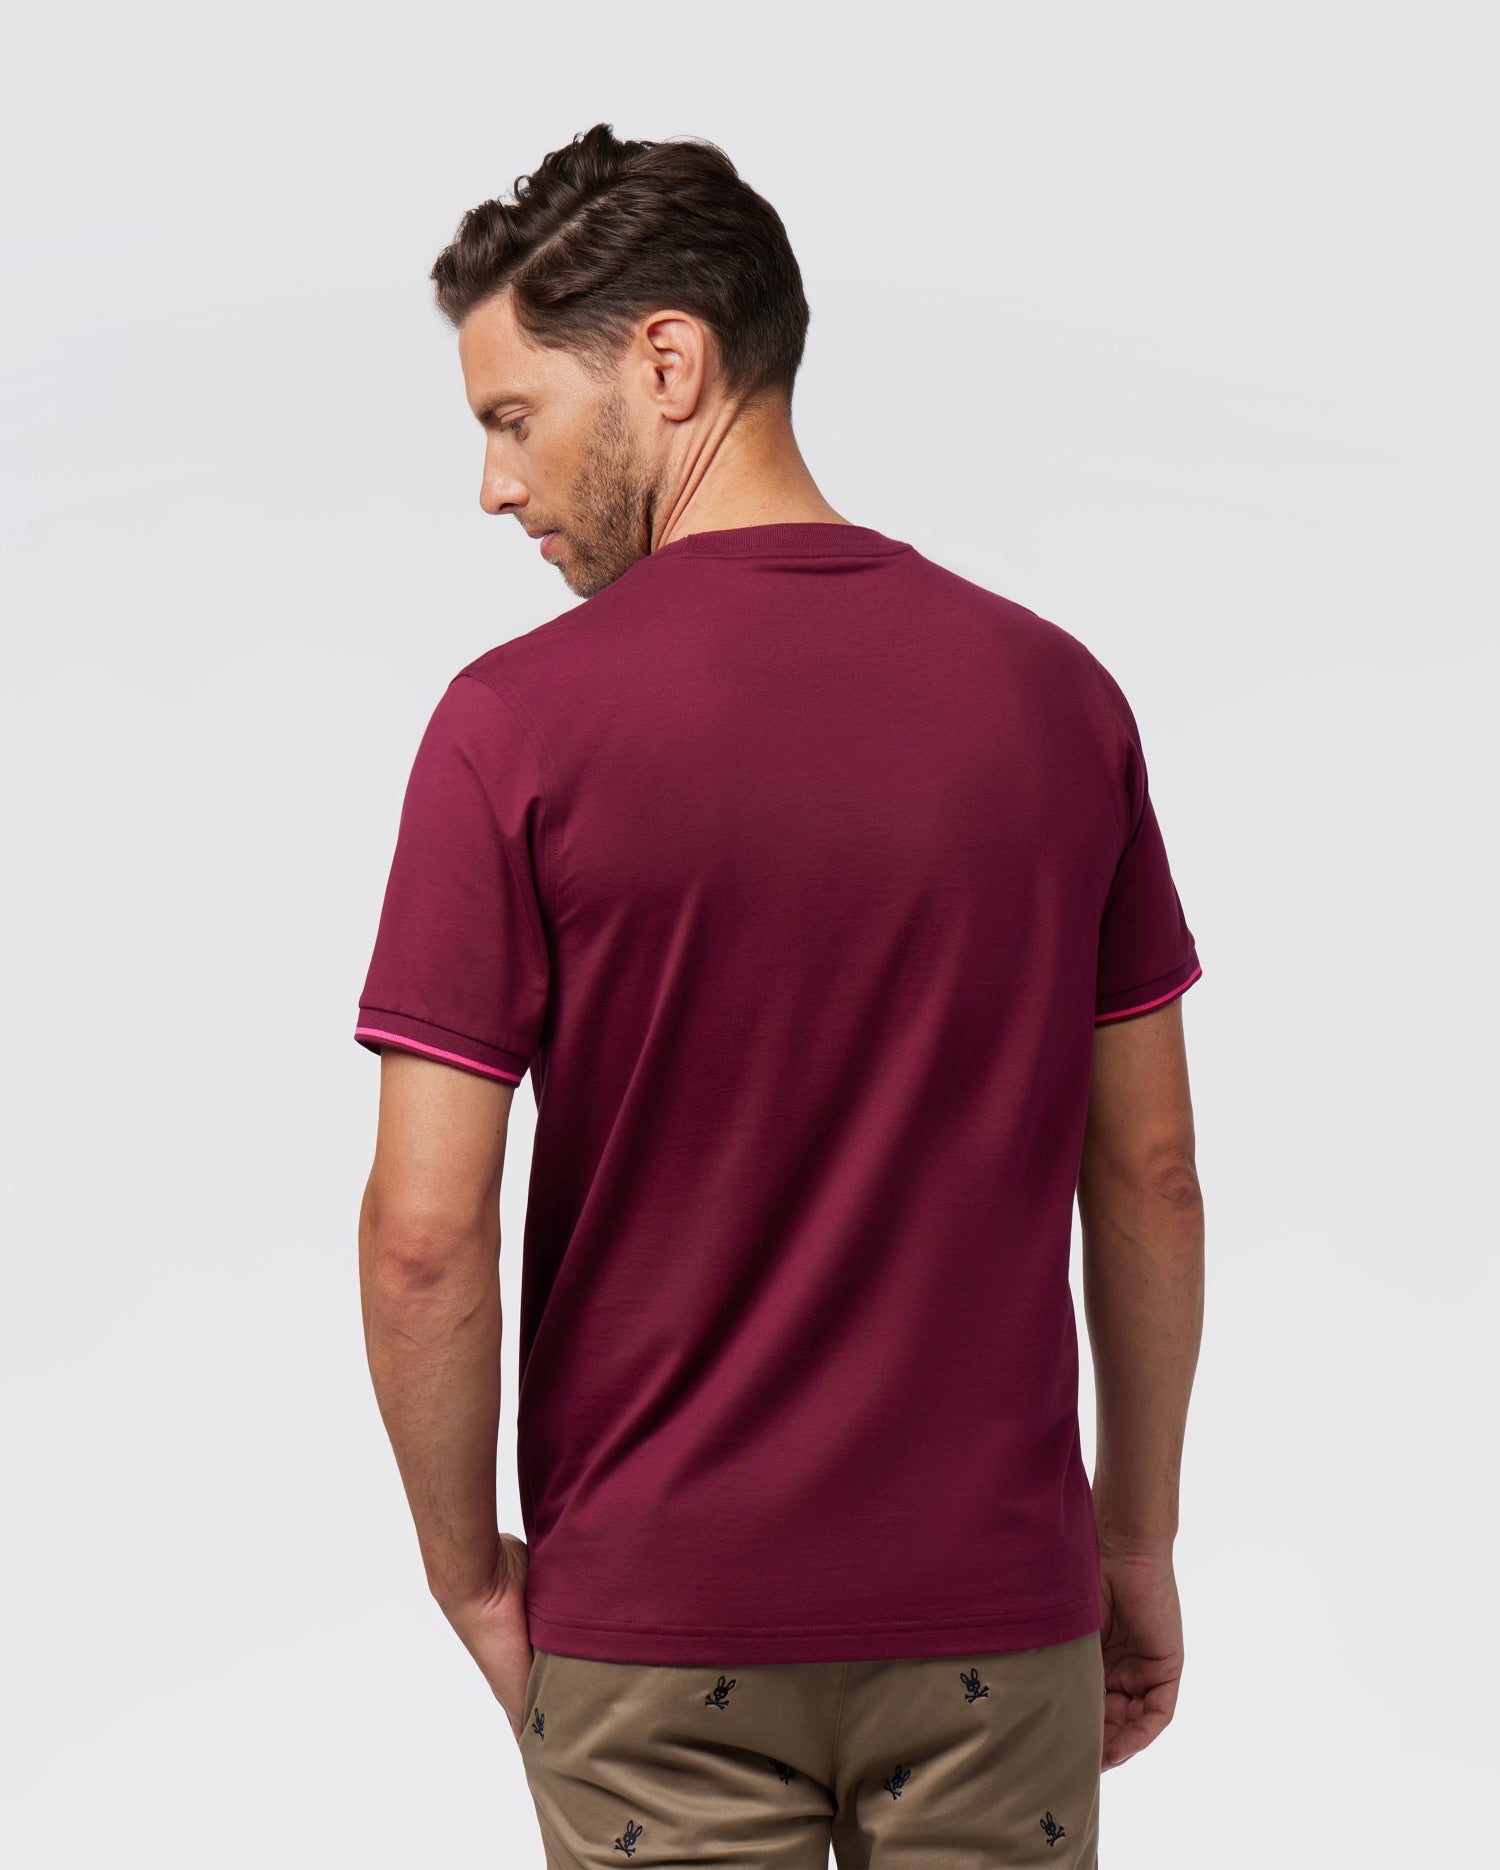  Men'S Short-Sleeve Crewneck T-Shirt Mens Letter